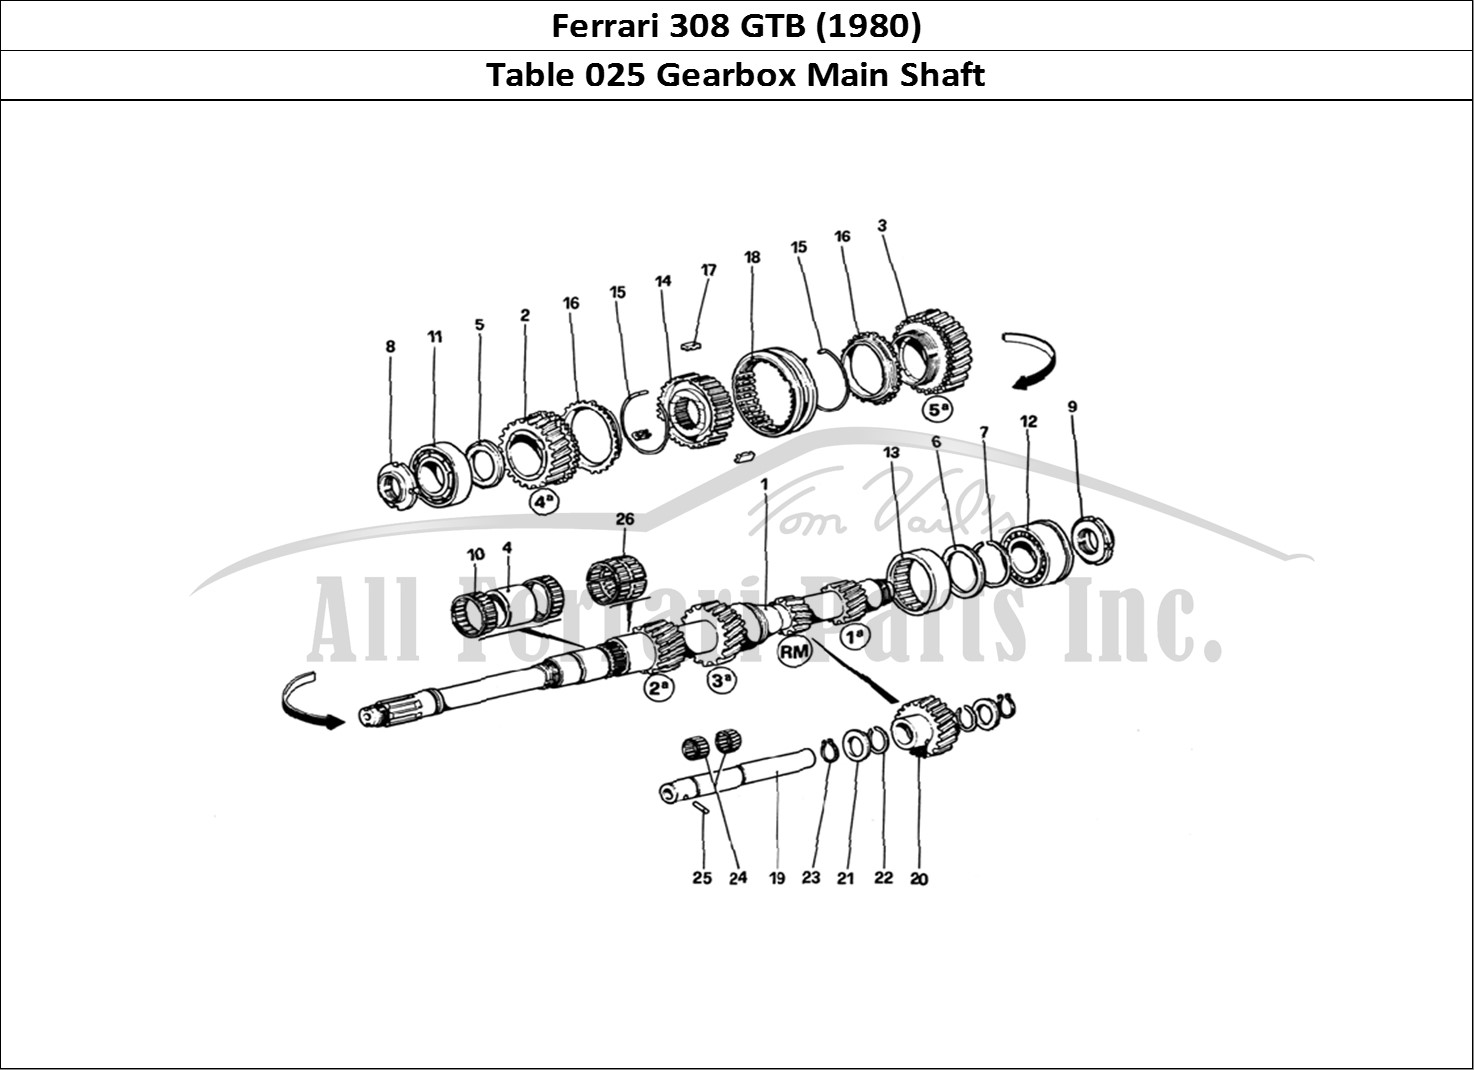 Ferrari Parts Ferrari 308 GTB (1980) Page 025 Main Shaft Gears